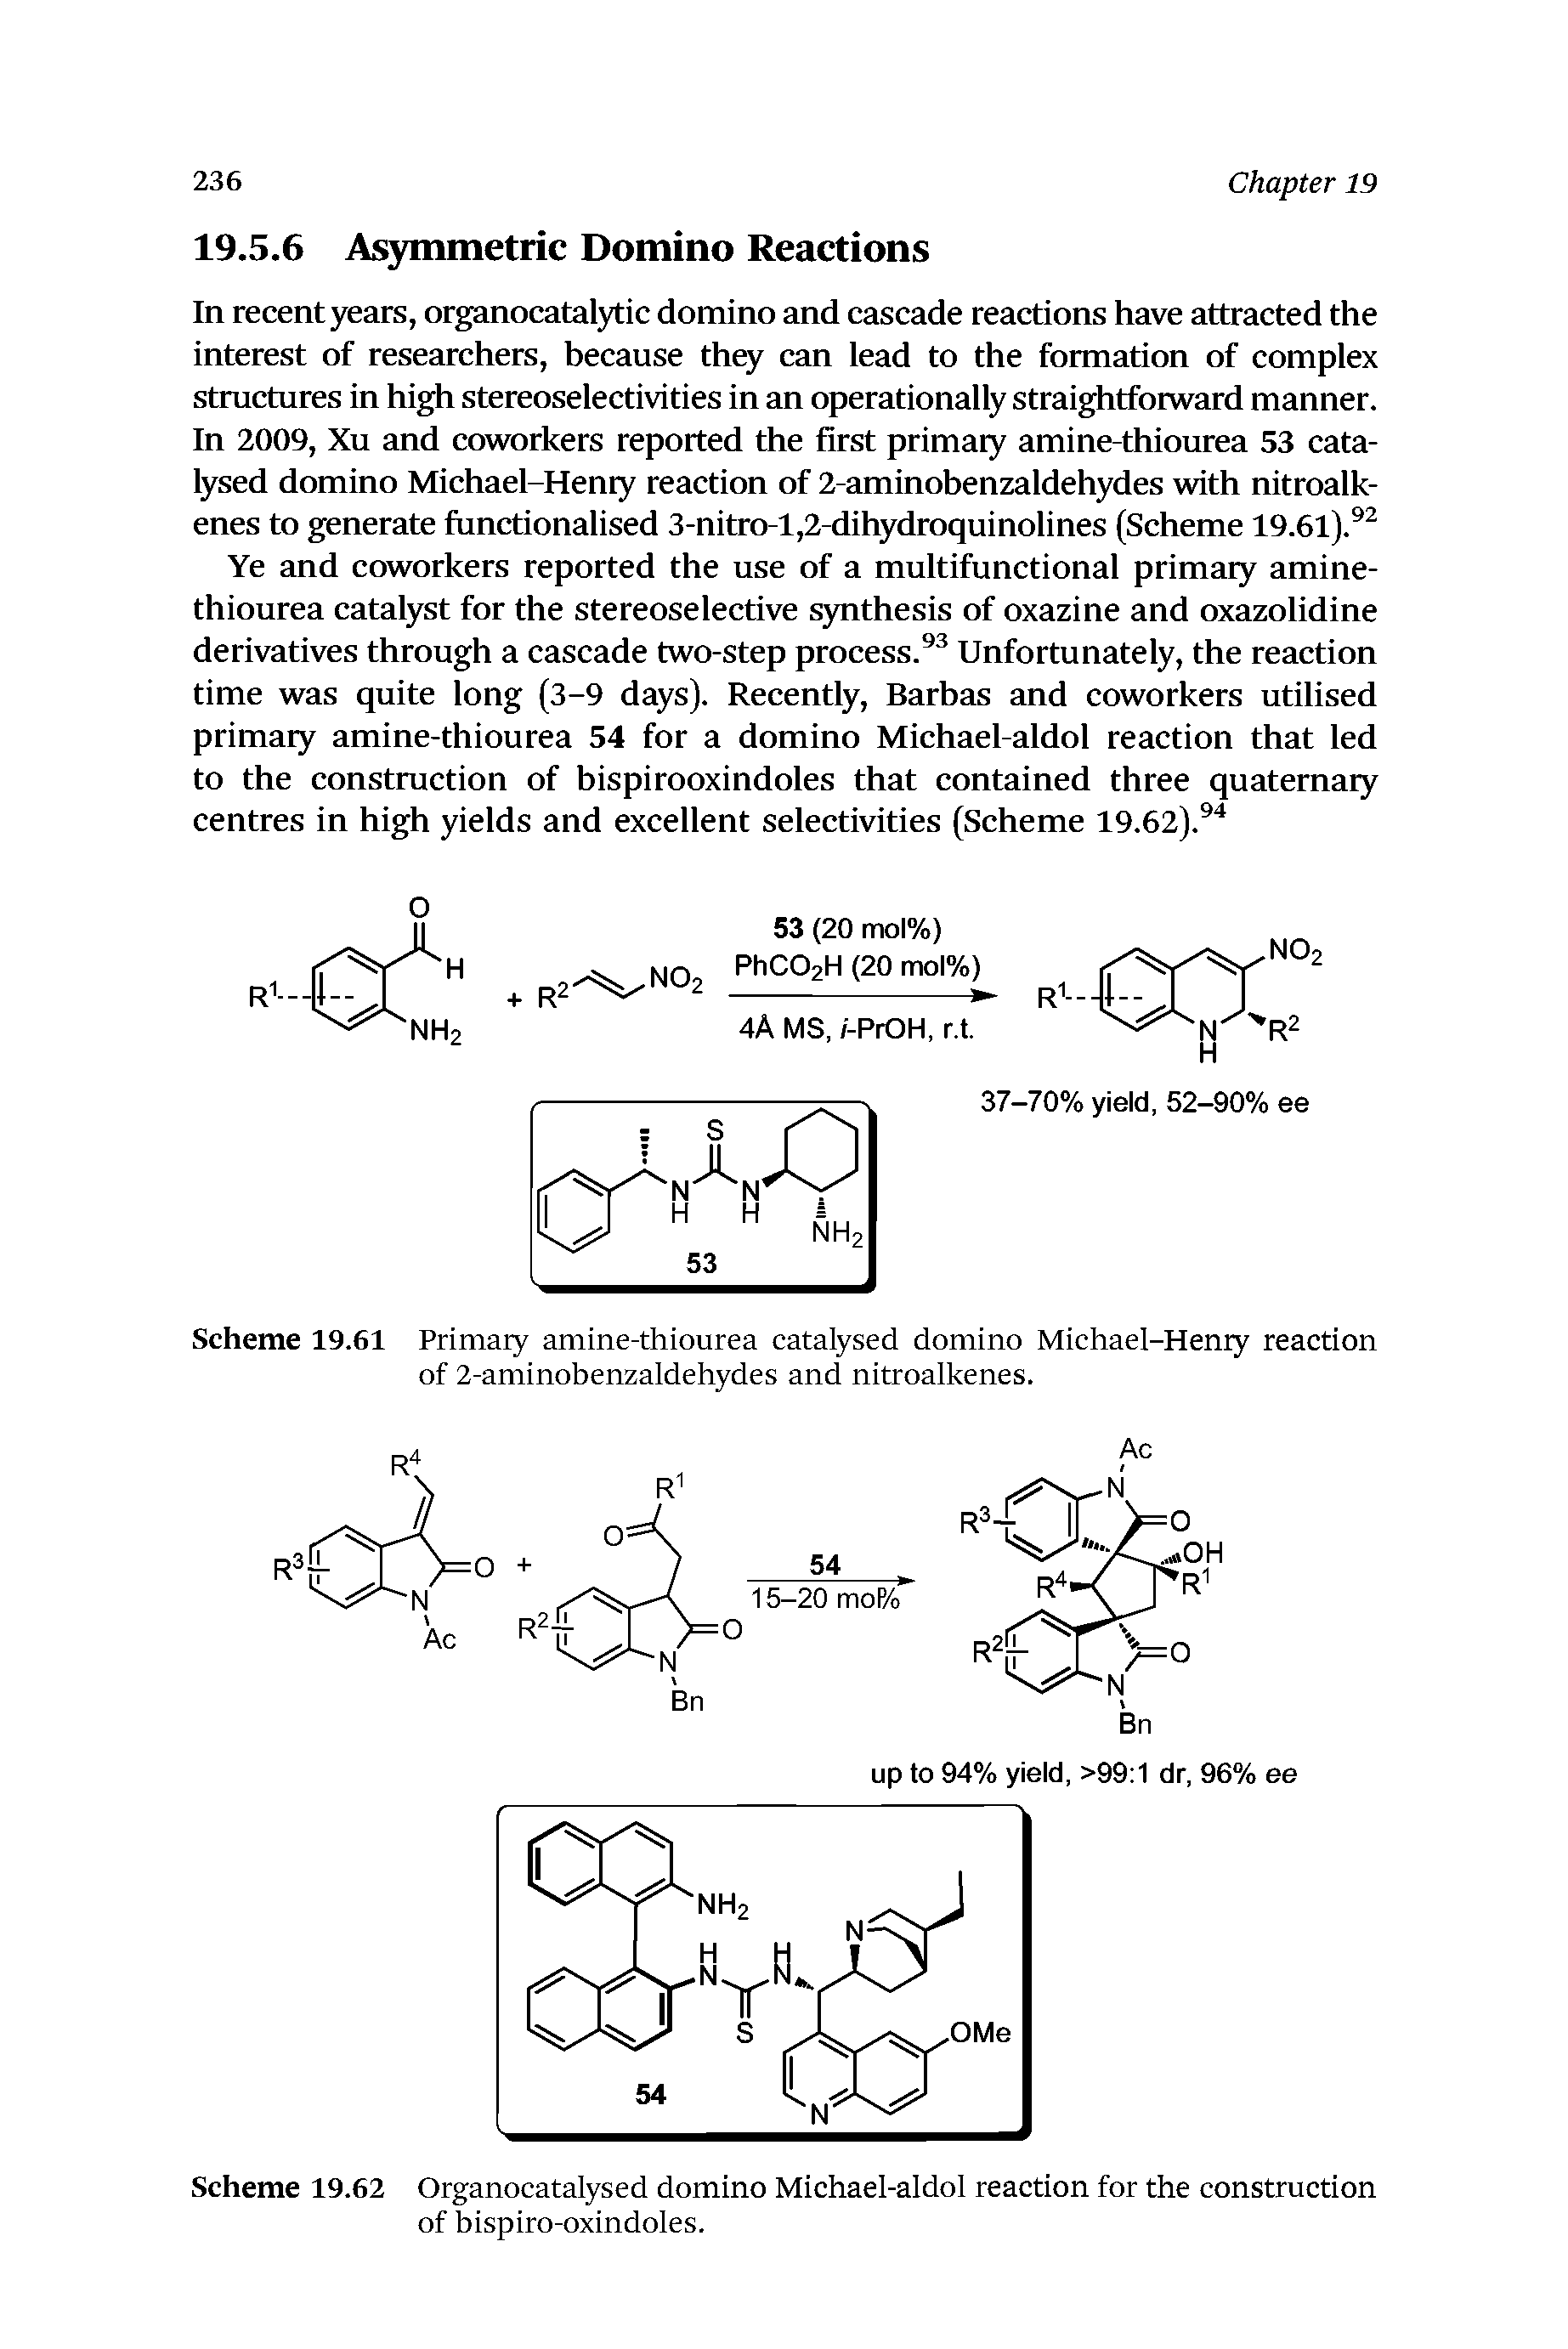 Scheme 19.62 Organocatalysed domino Michael-aldol reaction for the construction of bispiro-oxindoles.